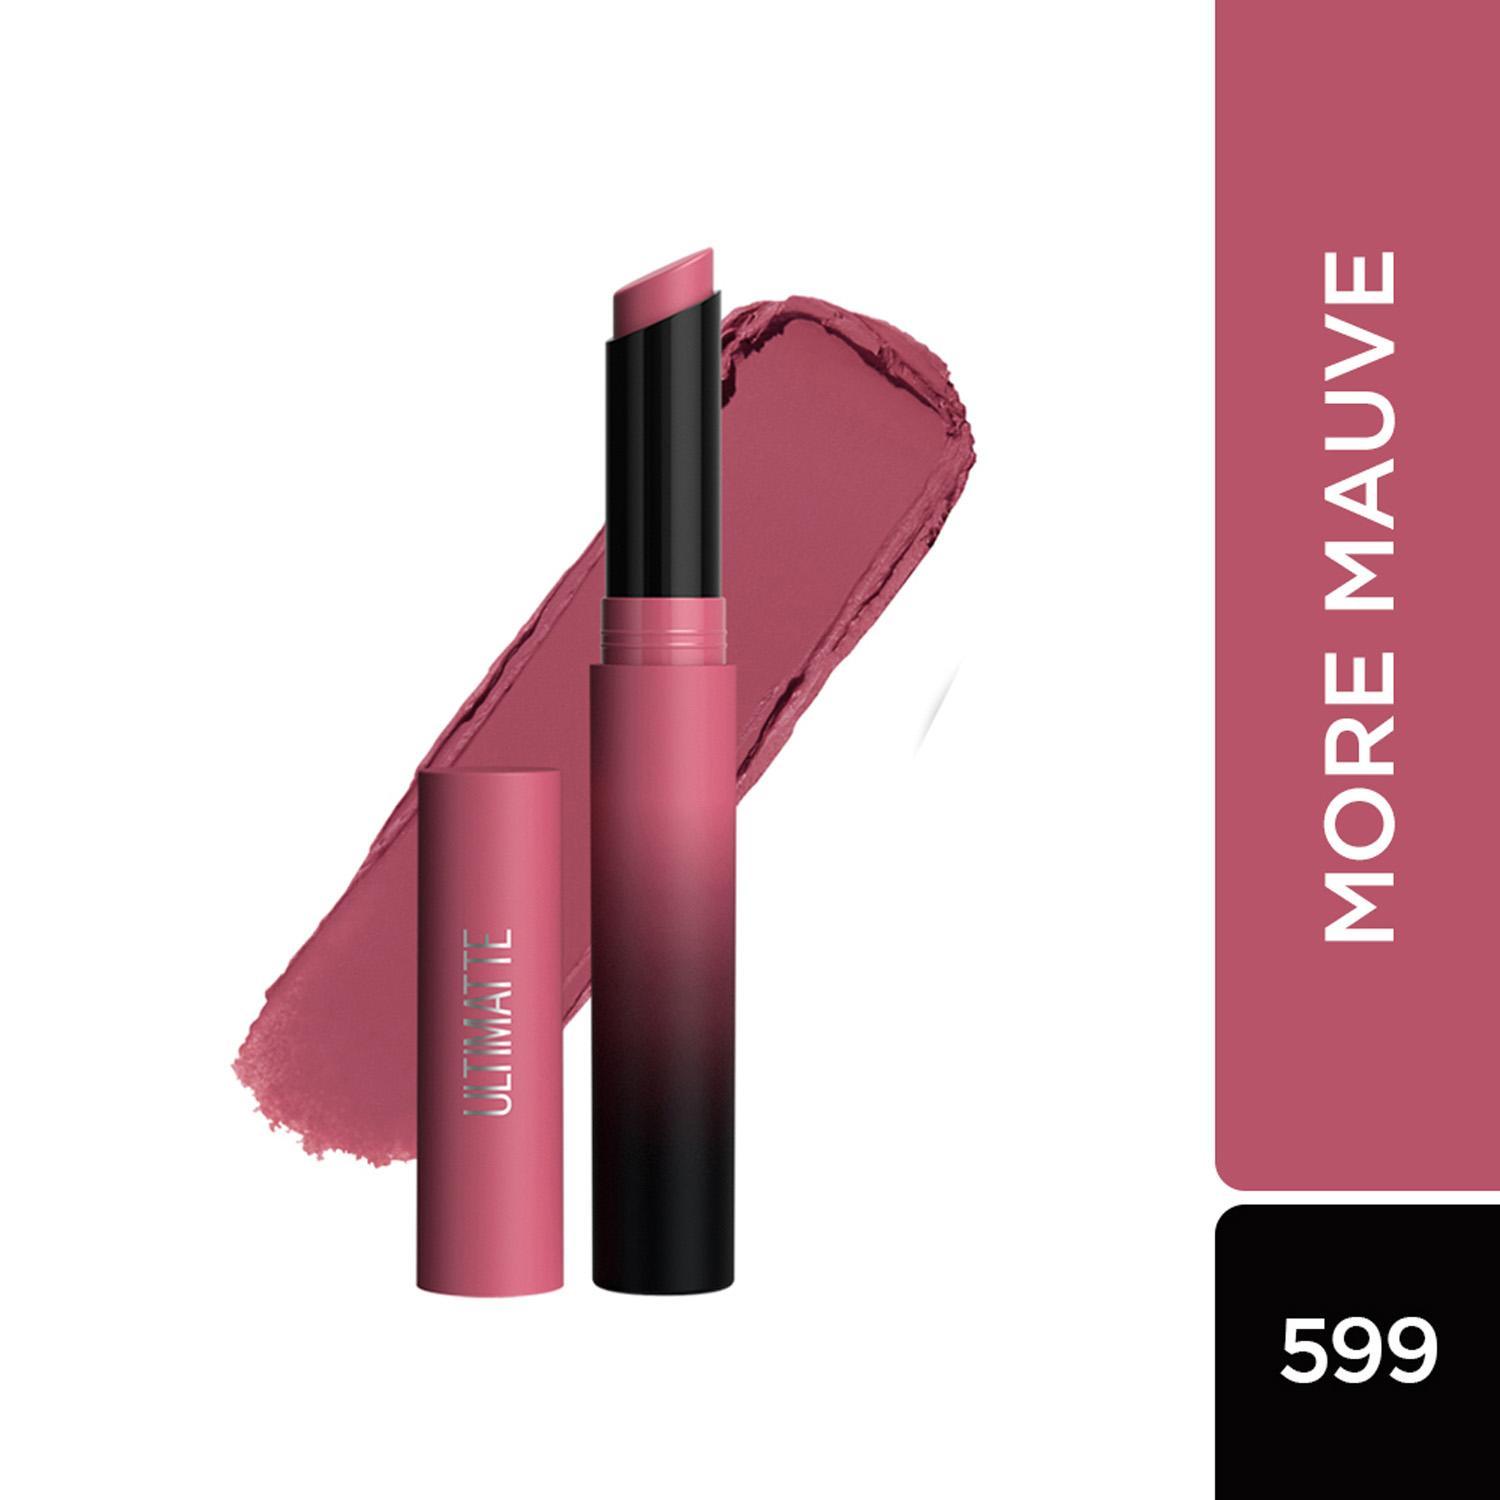 maybelline new york color sensational ultimattes lipstick - more mauve (1.7g)